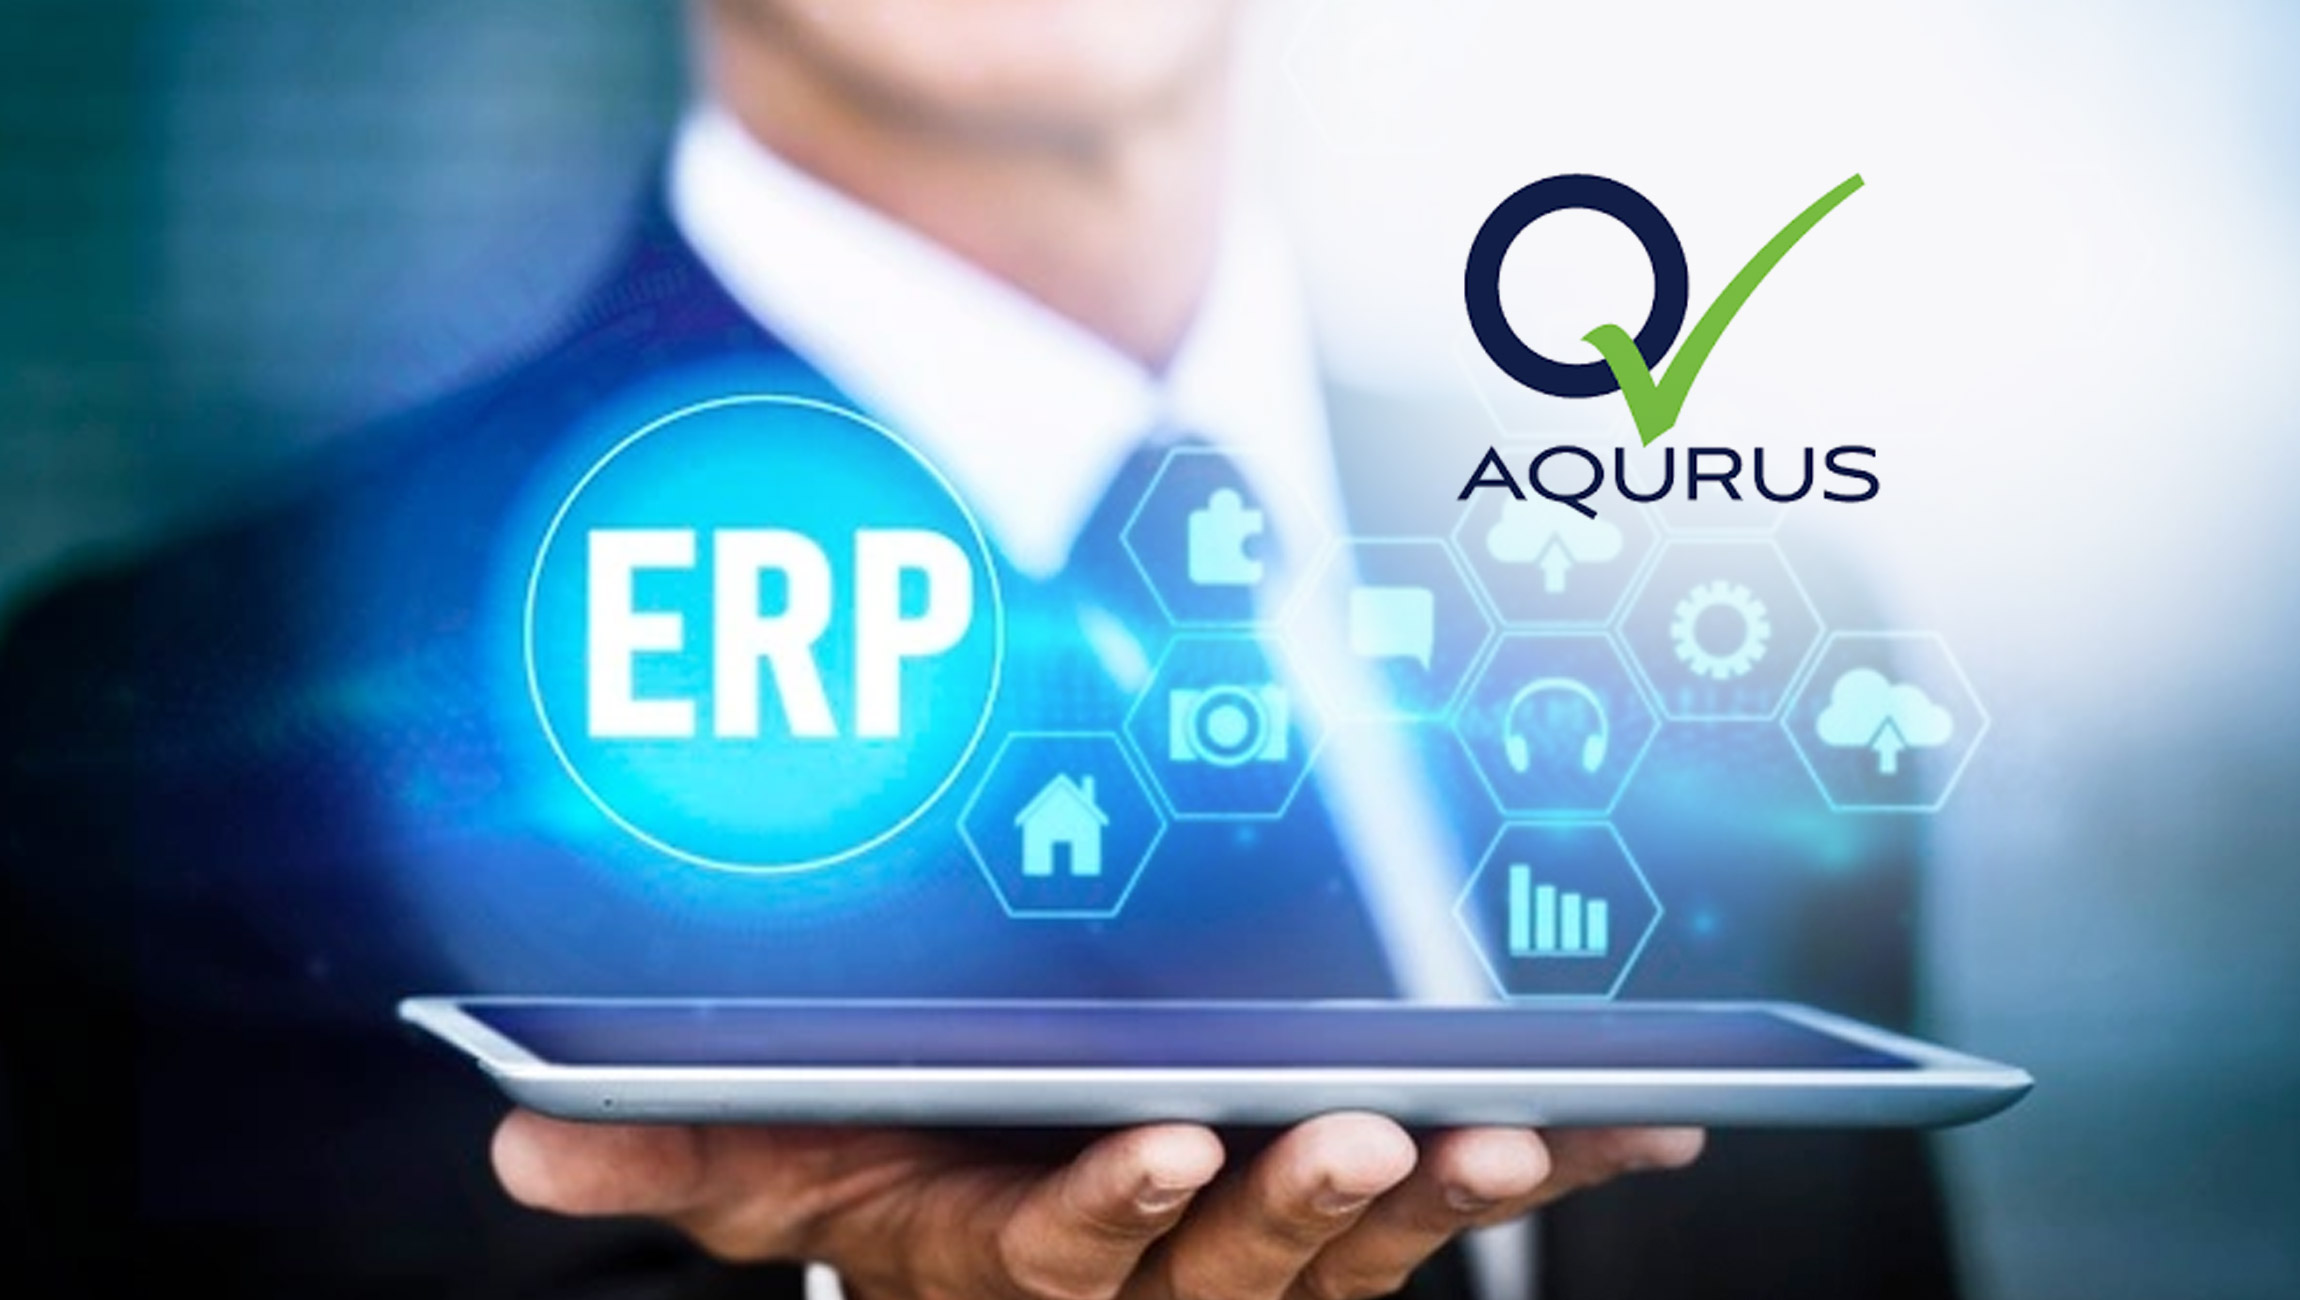 Aqurus Launches Distribution ERP Software Resource Center